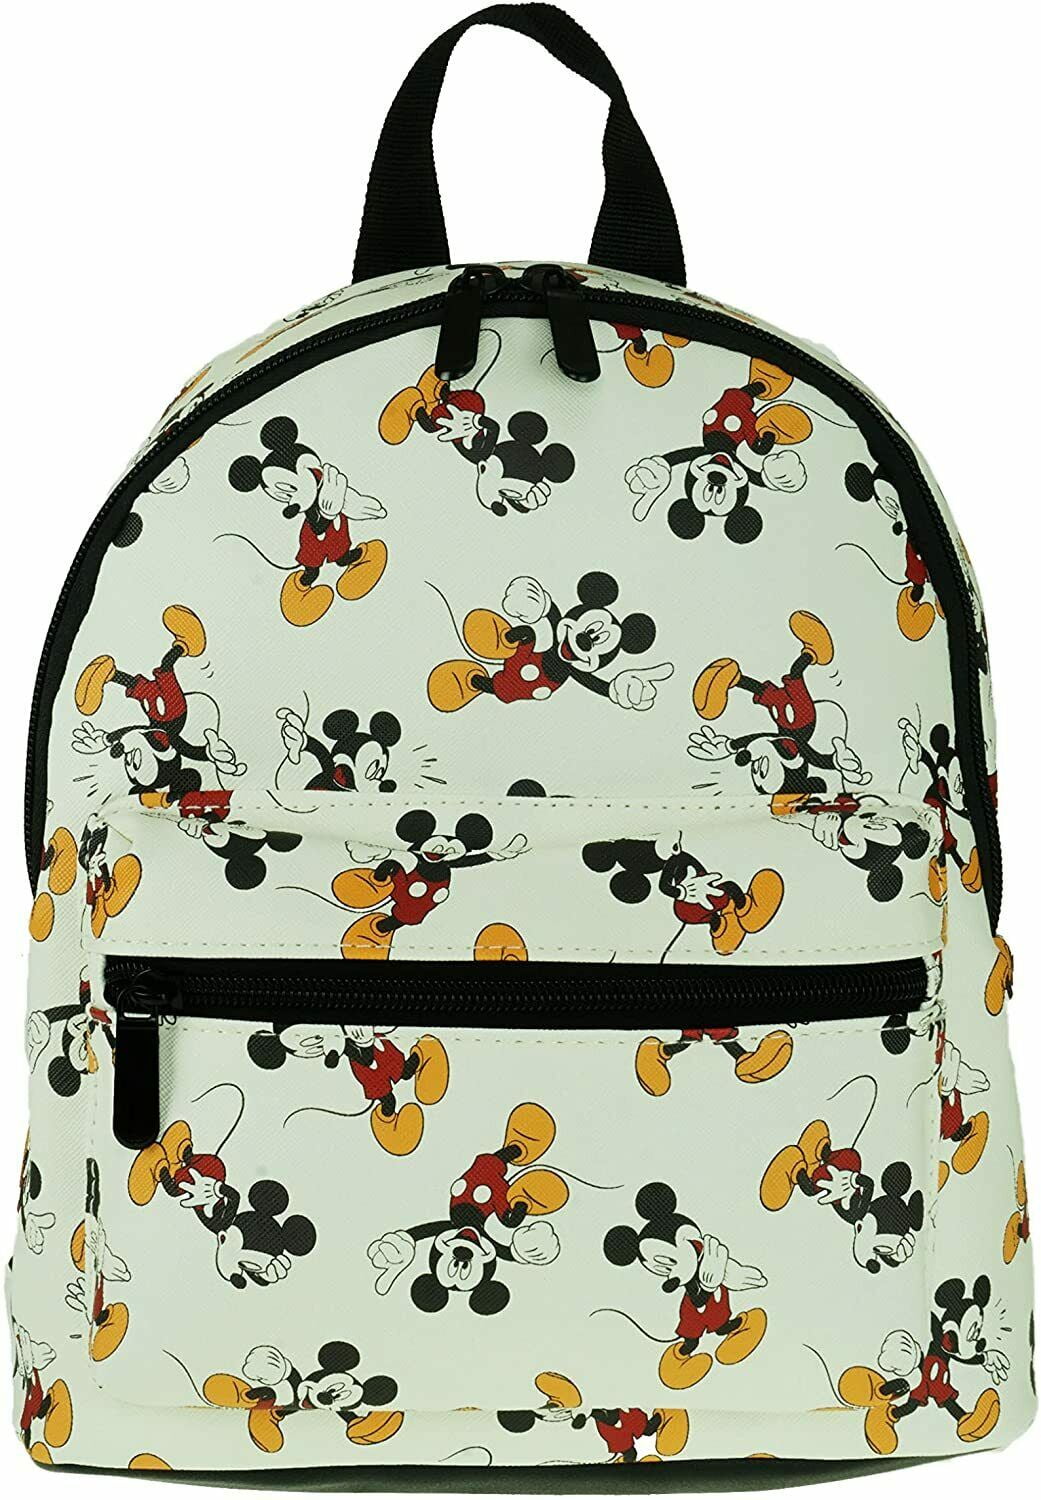 Disney Mickey New Women's Travel Tote Bag Luxury Brand Men's and